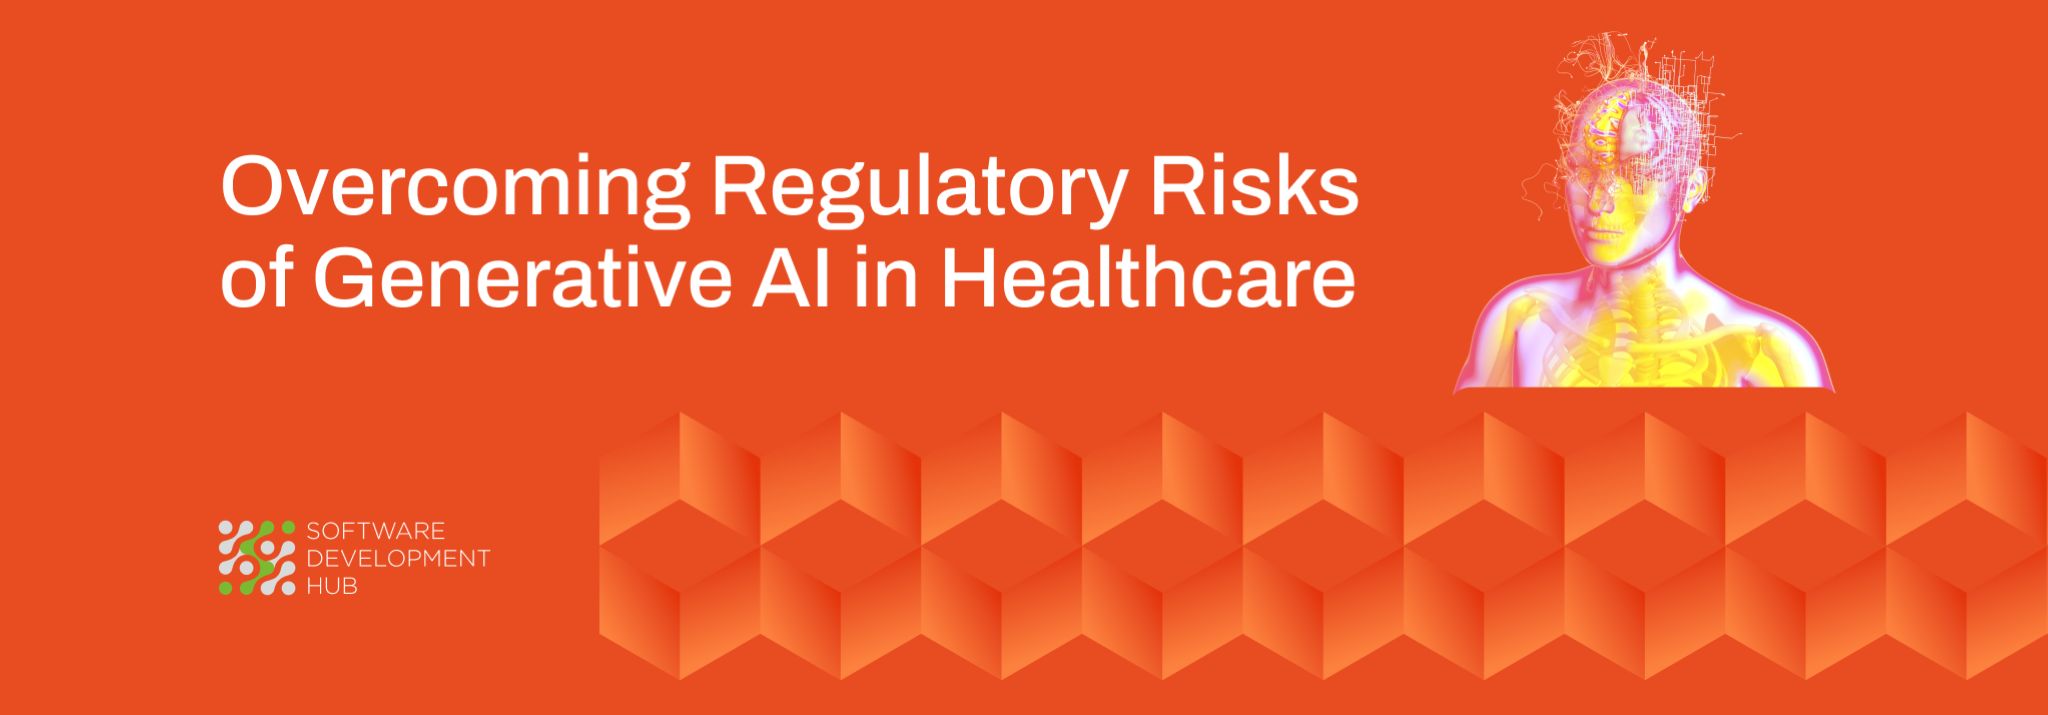 Overcoming regulatory risks of generative AI in healthcare